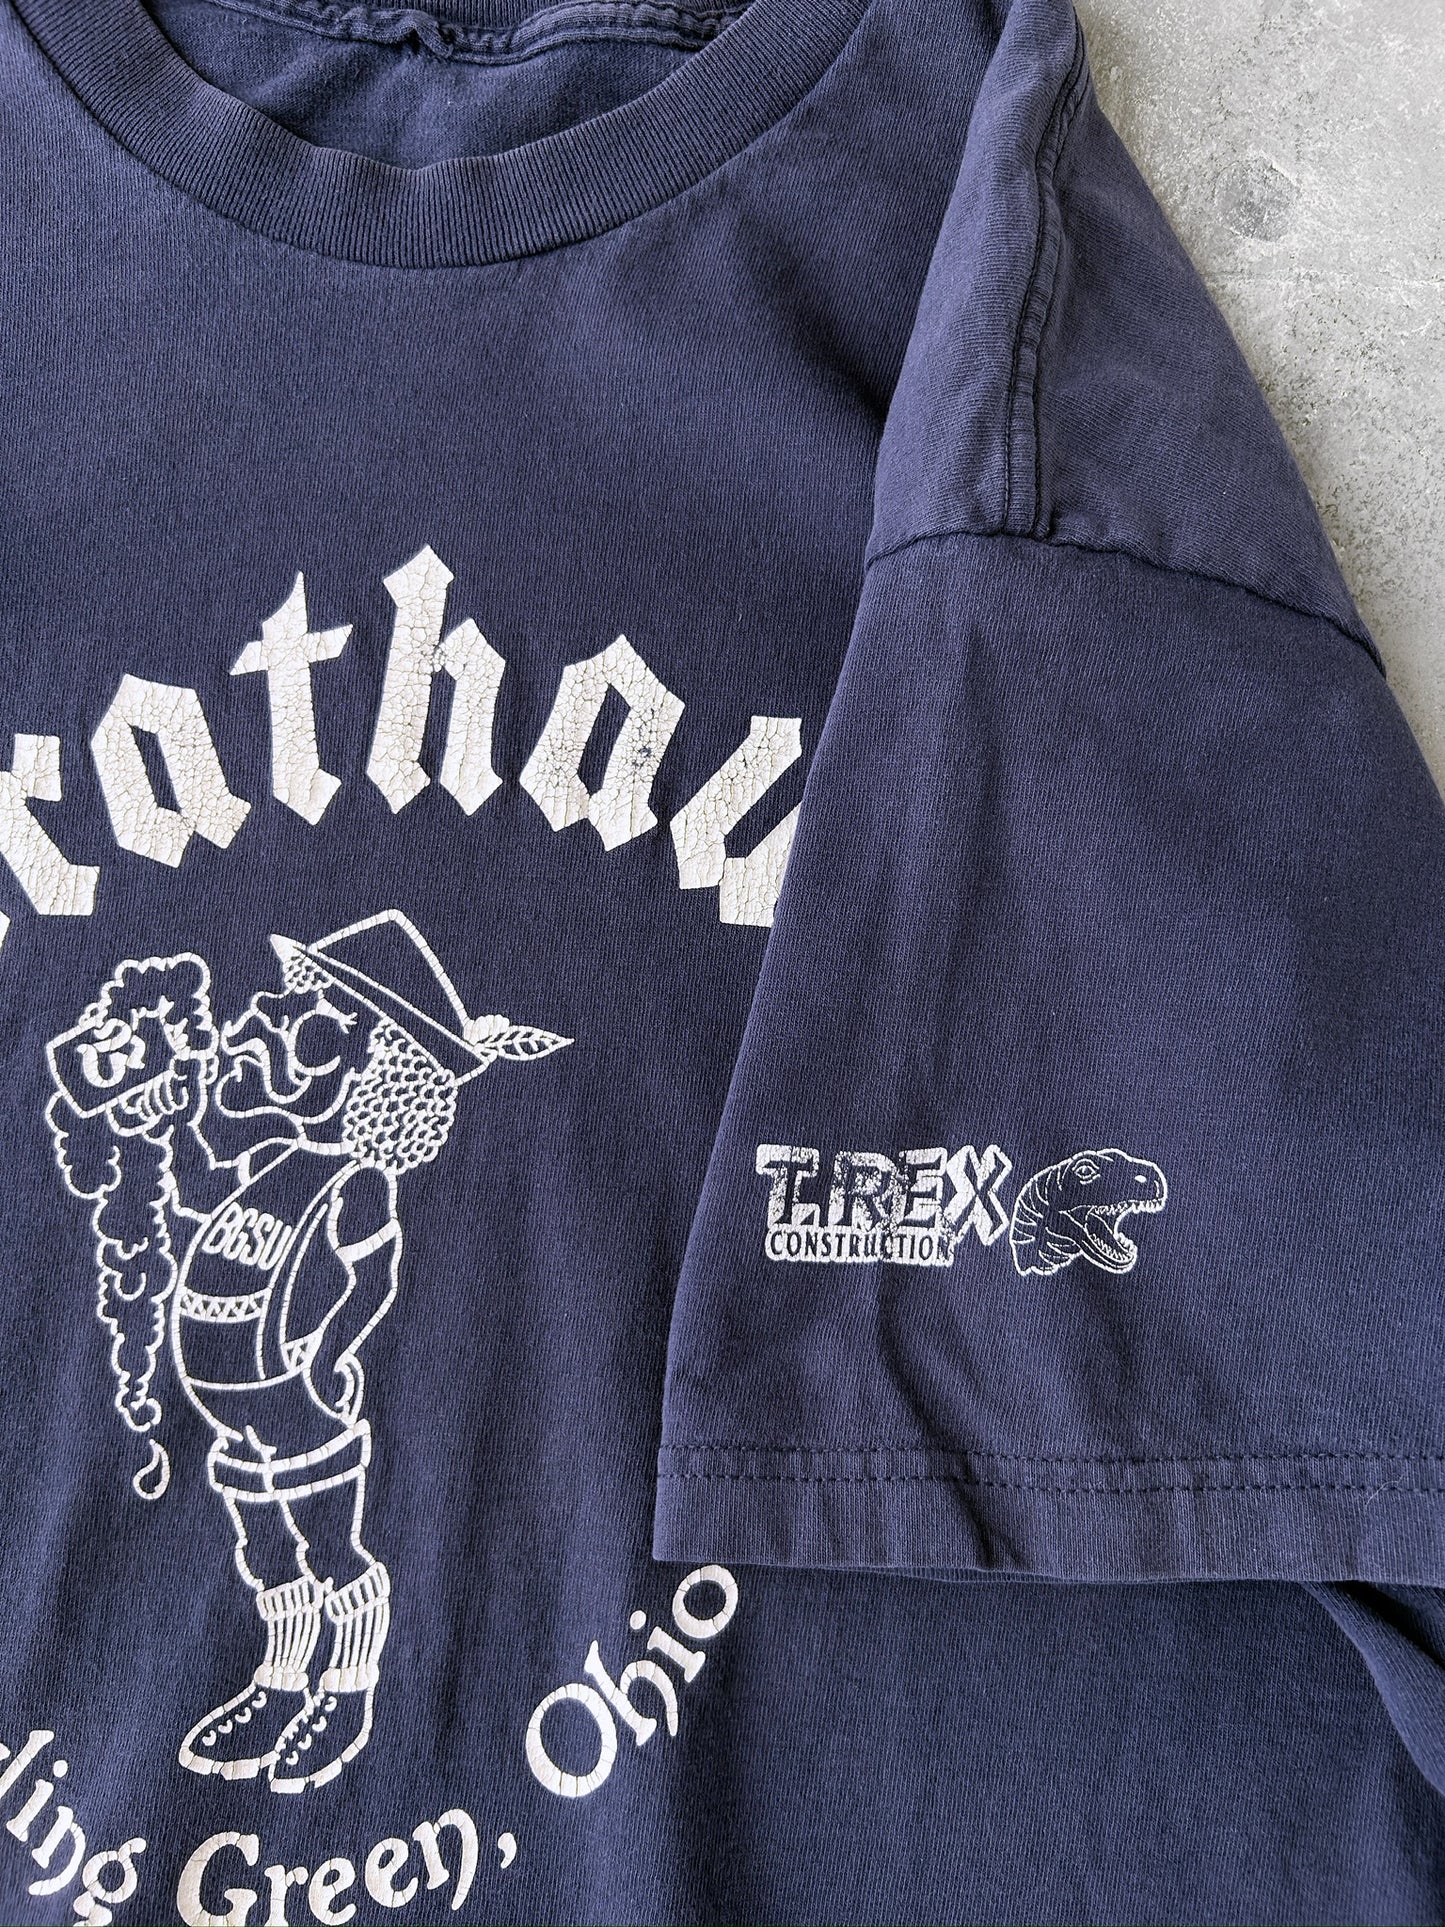 Brathaus T-Shirt 00's - XL